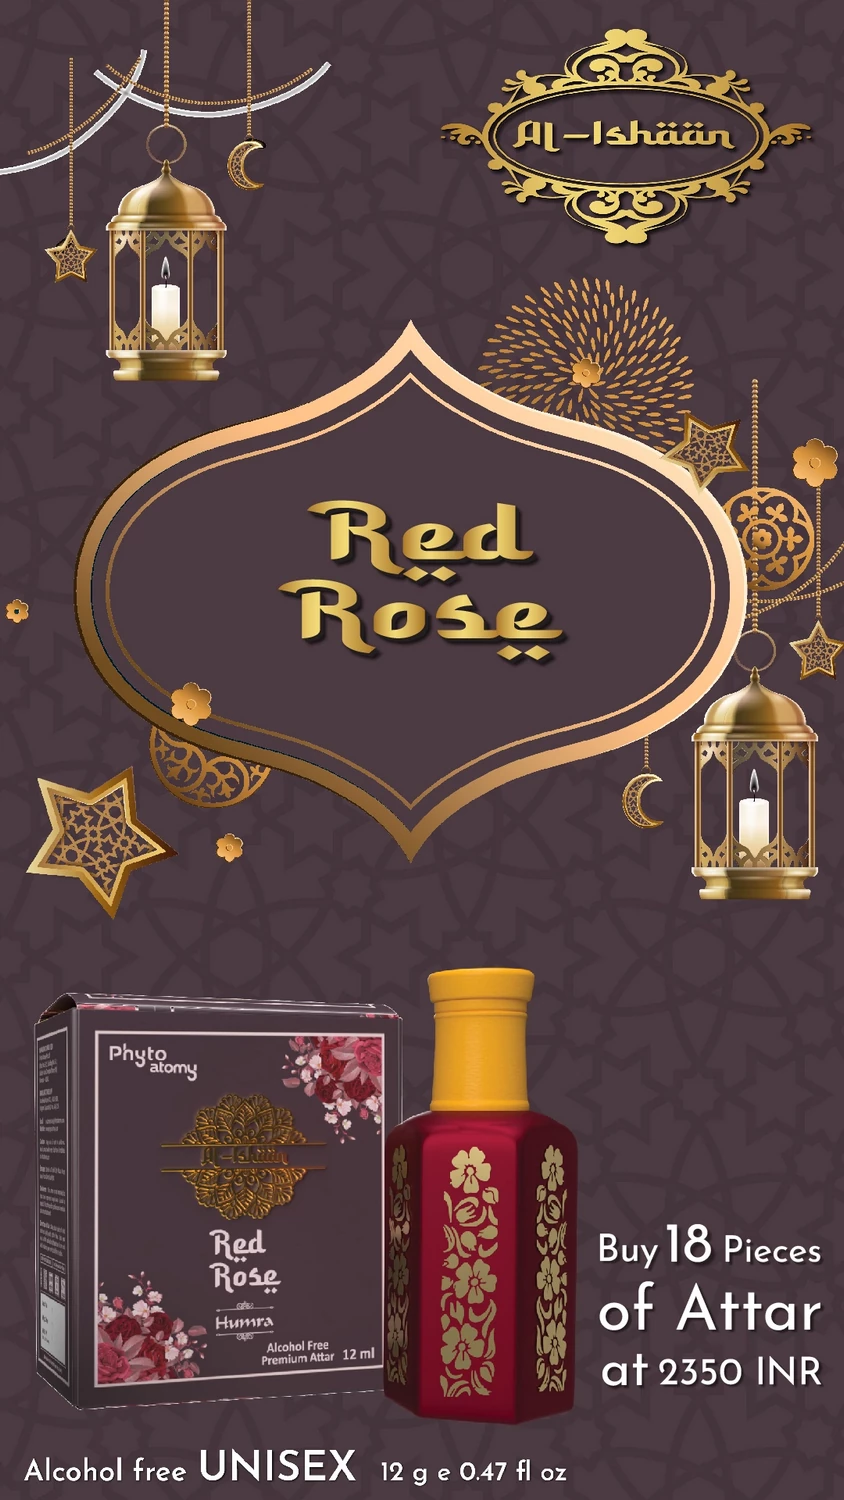 SCBV B2B Al Ishan Red Rose Attar (12ml)-18 Pcs.